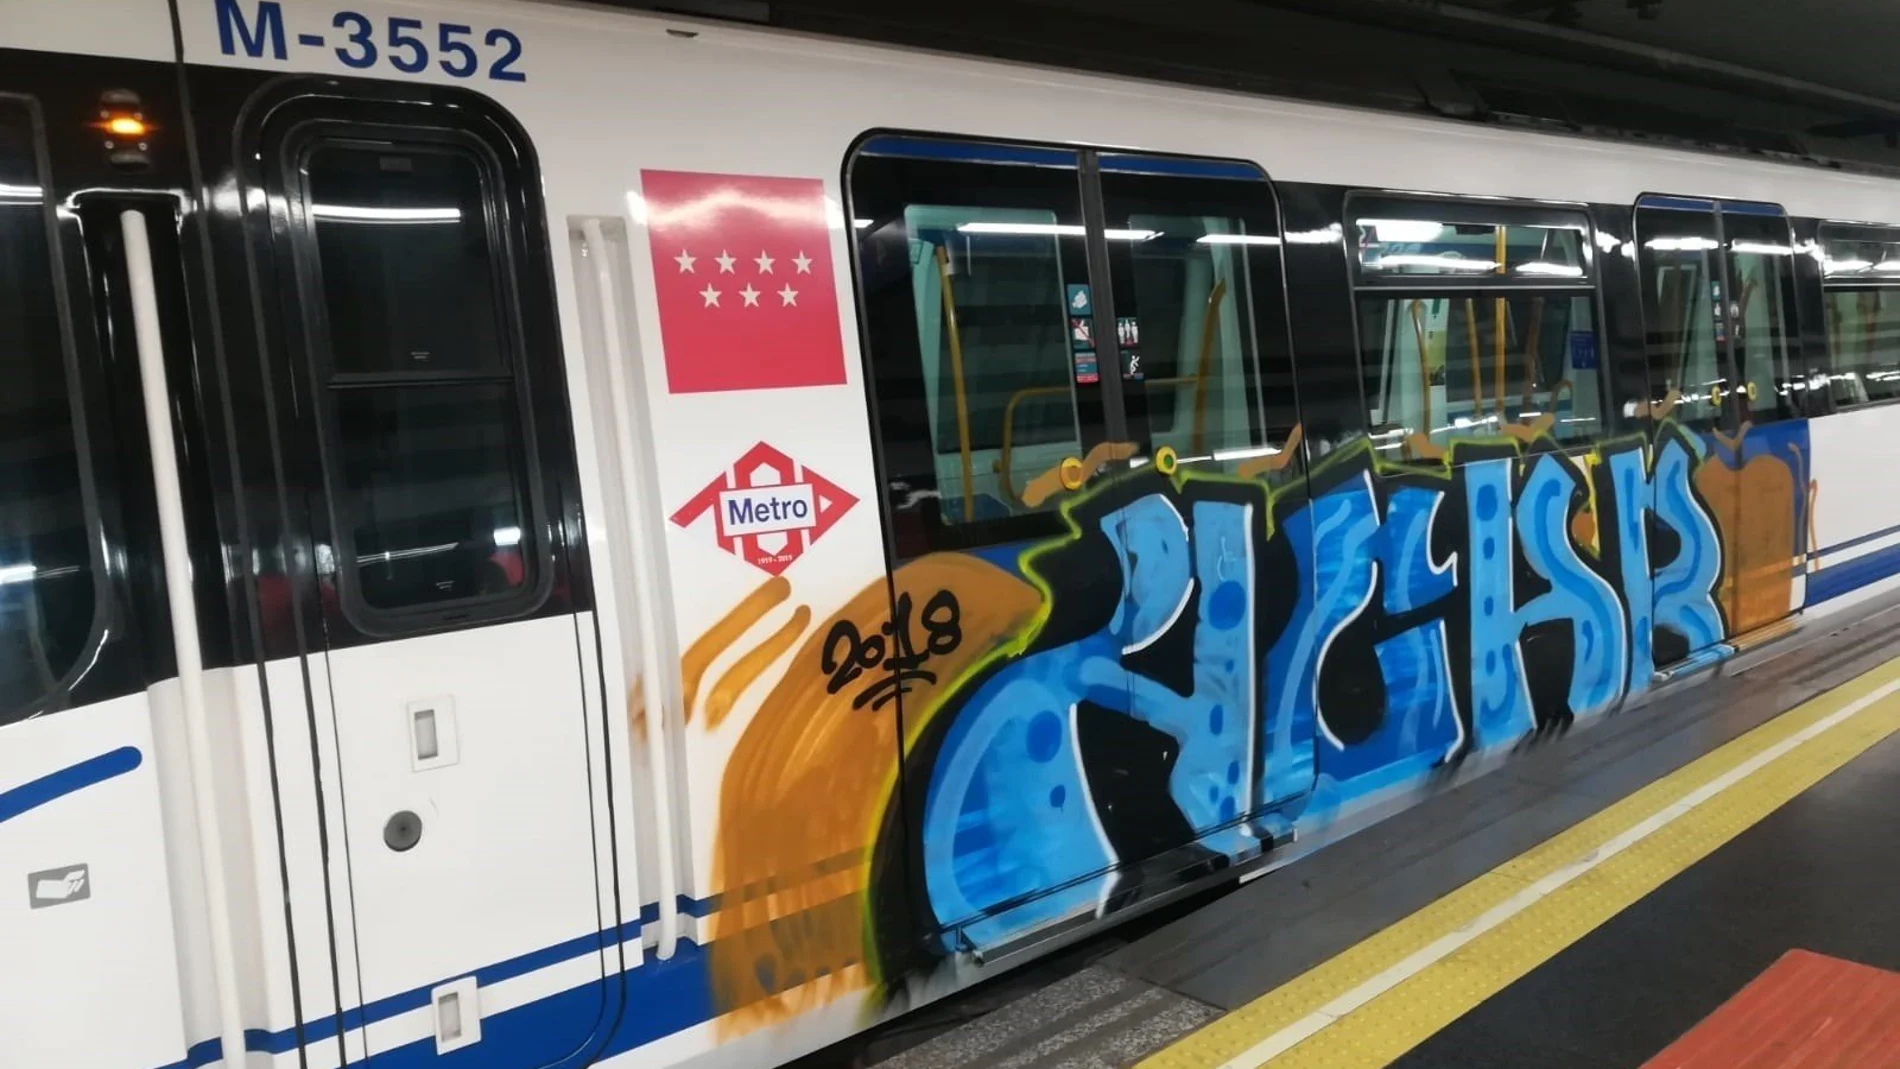 Tren pintado por grafiteros en la estación de Metro de Argüelles en noviembre de 2018